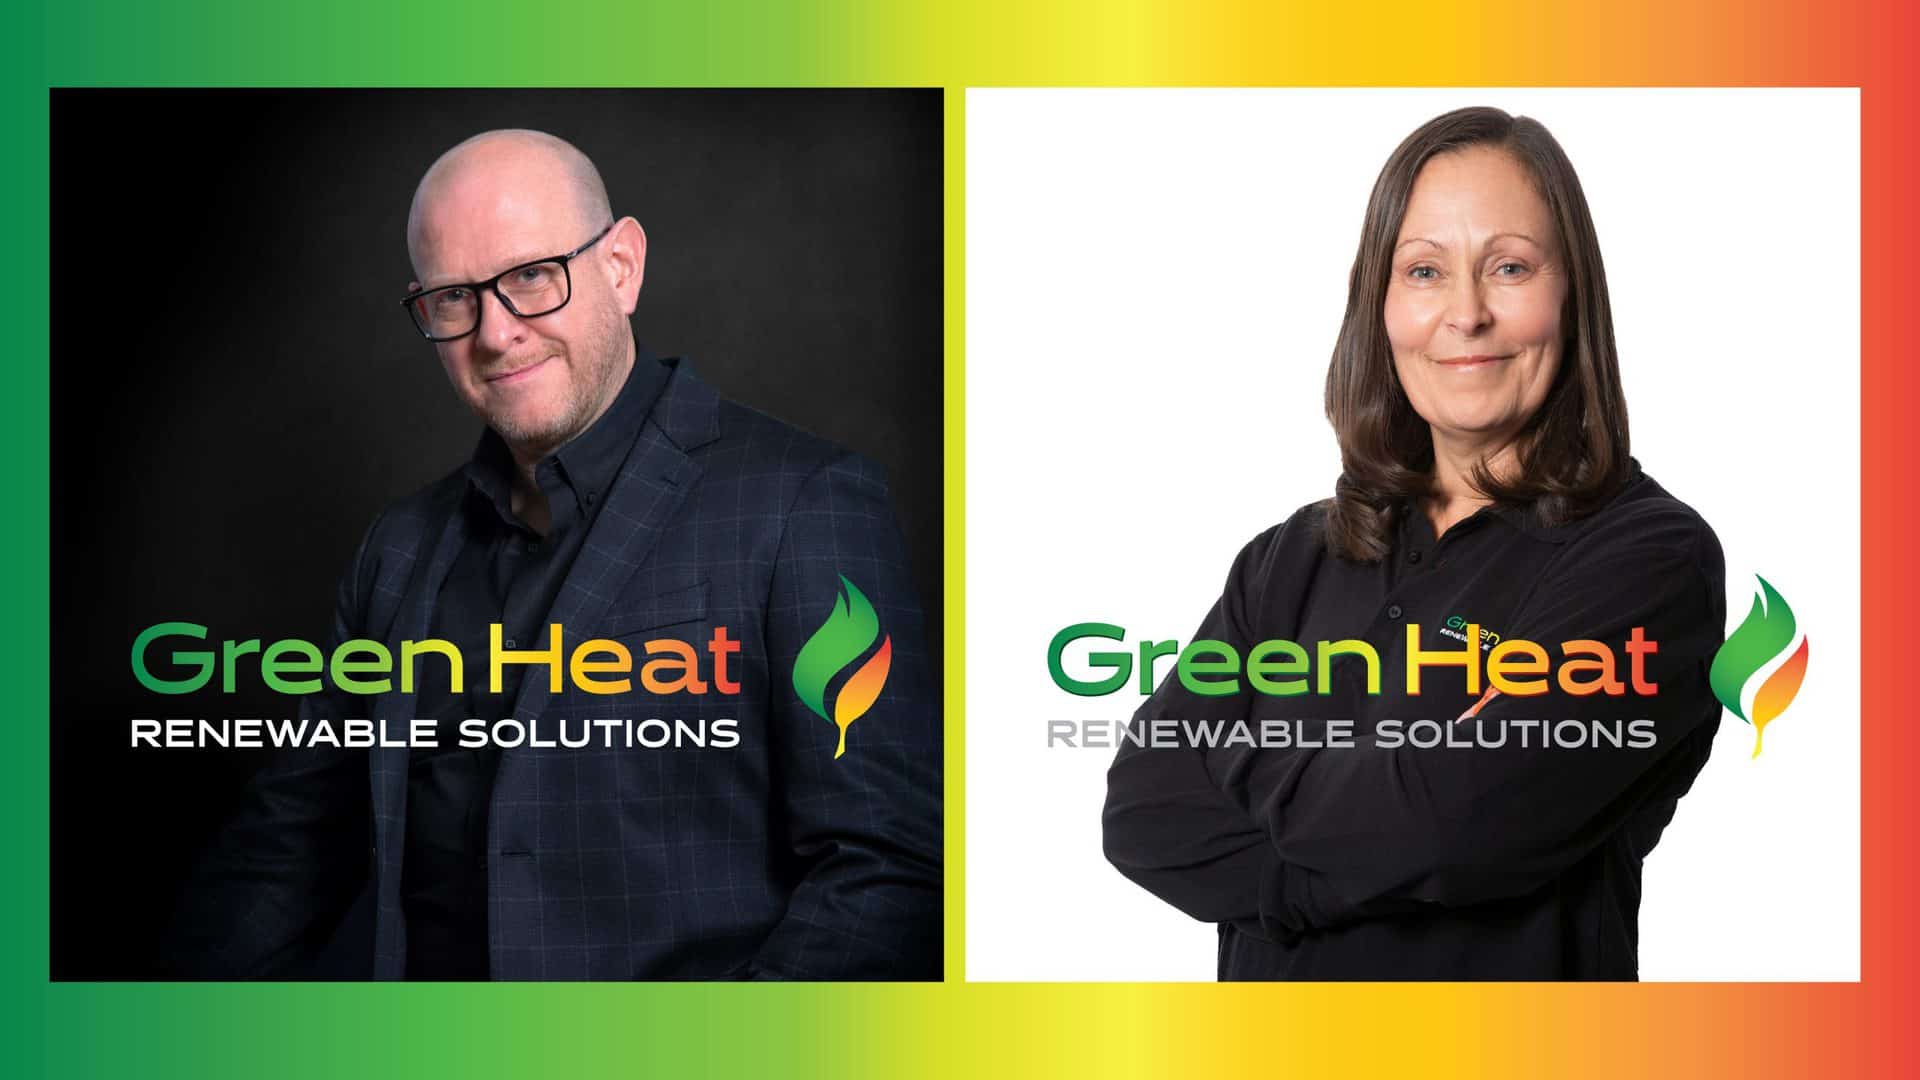 GreenHeat Renewable Solutions personal branding images 1